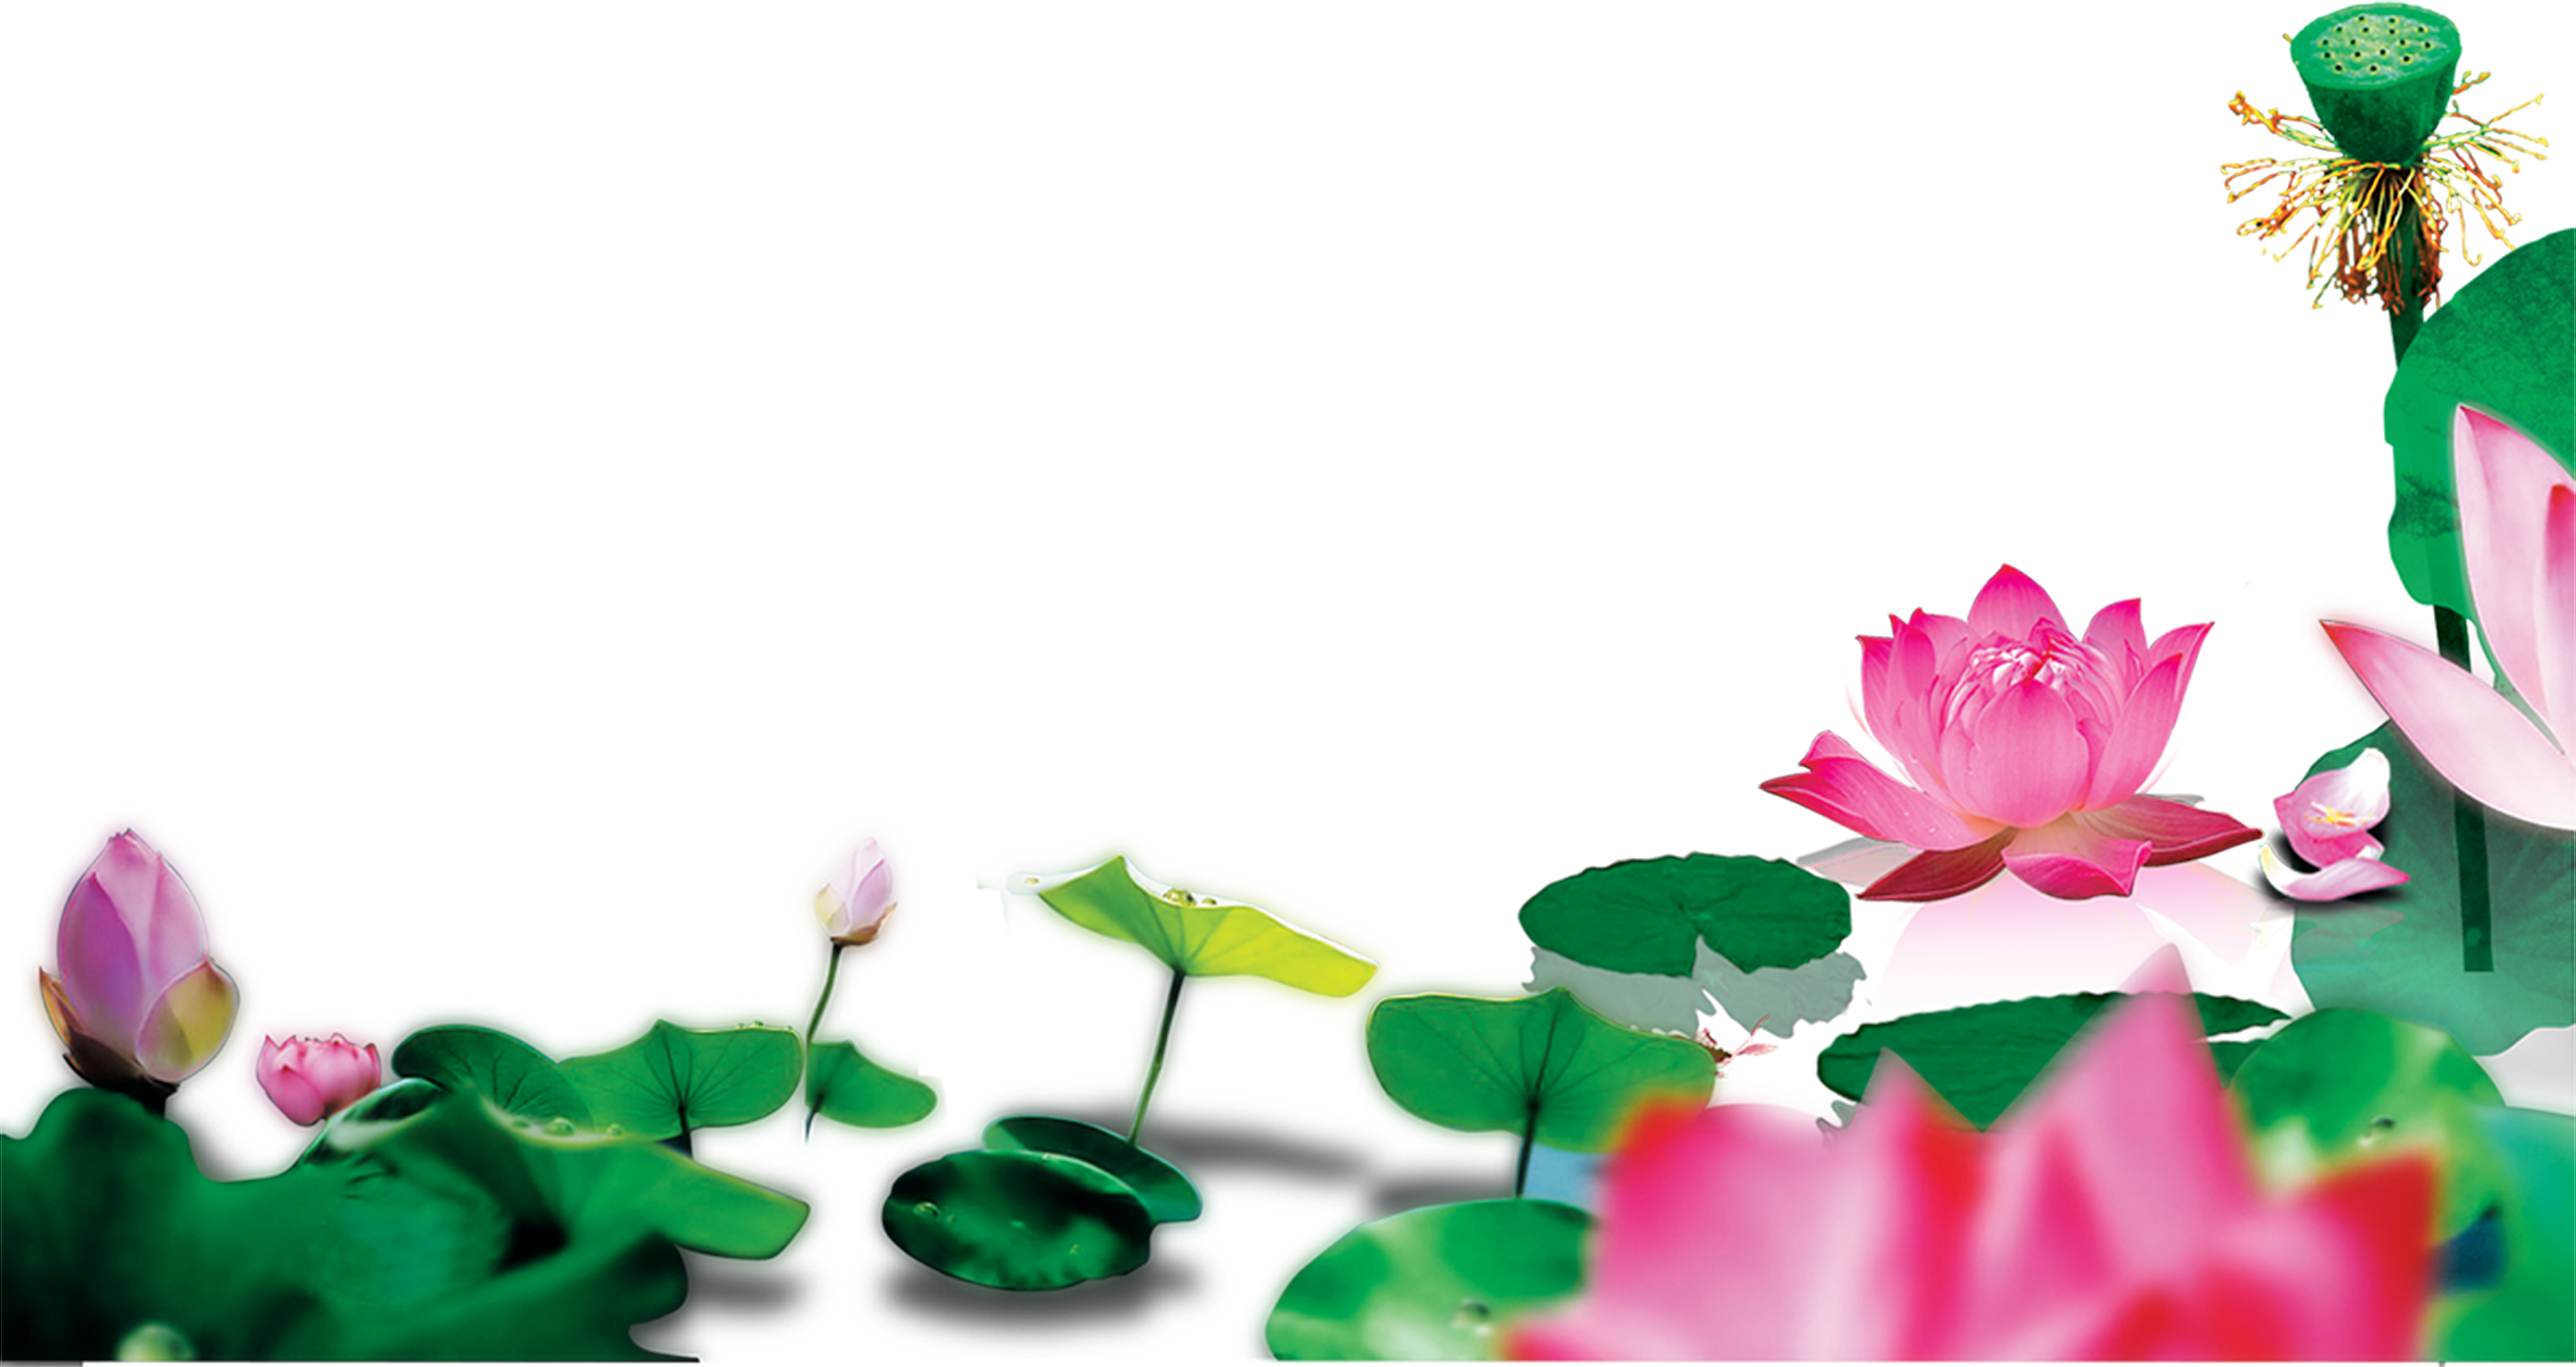 Lotus clipart pond flower, Lotus pond flower Transparent